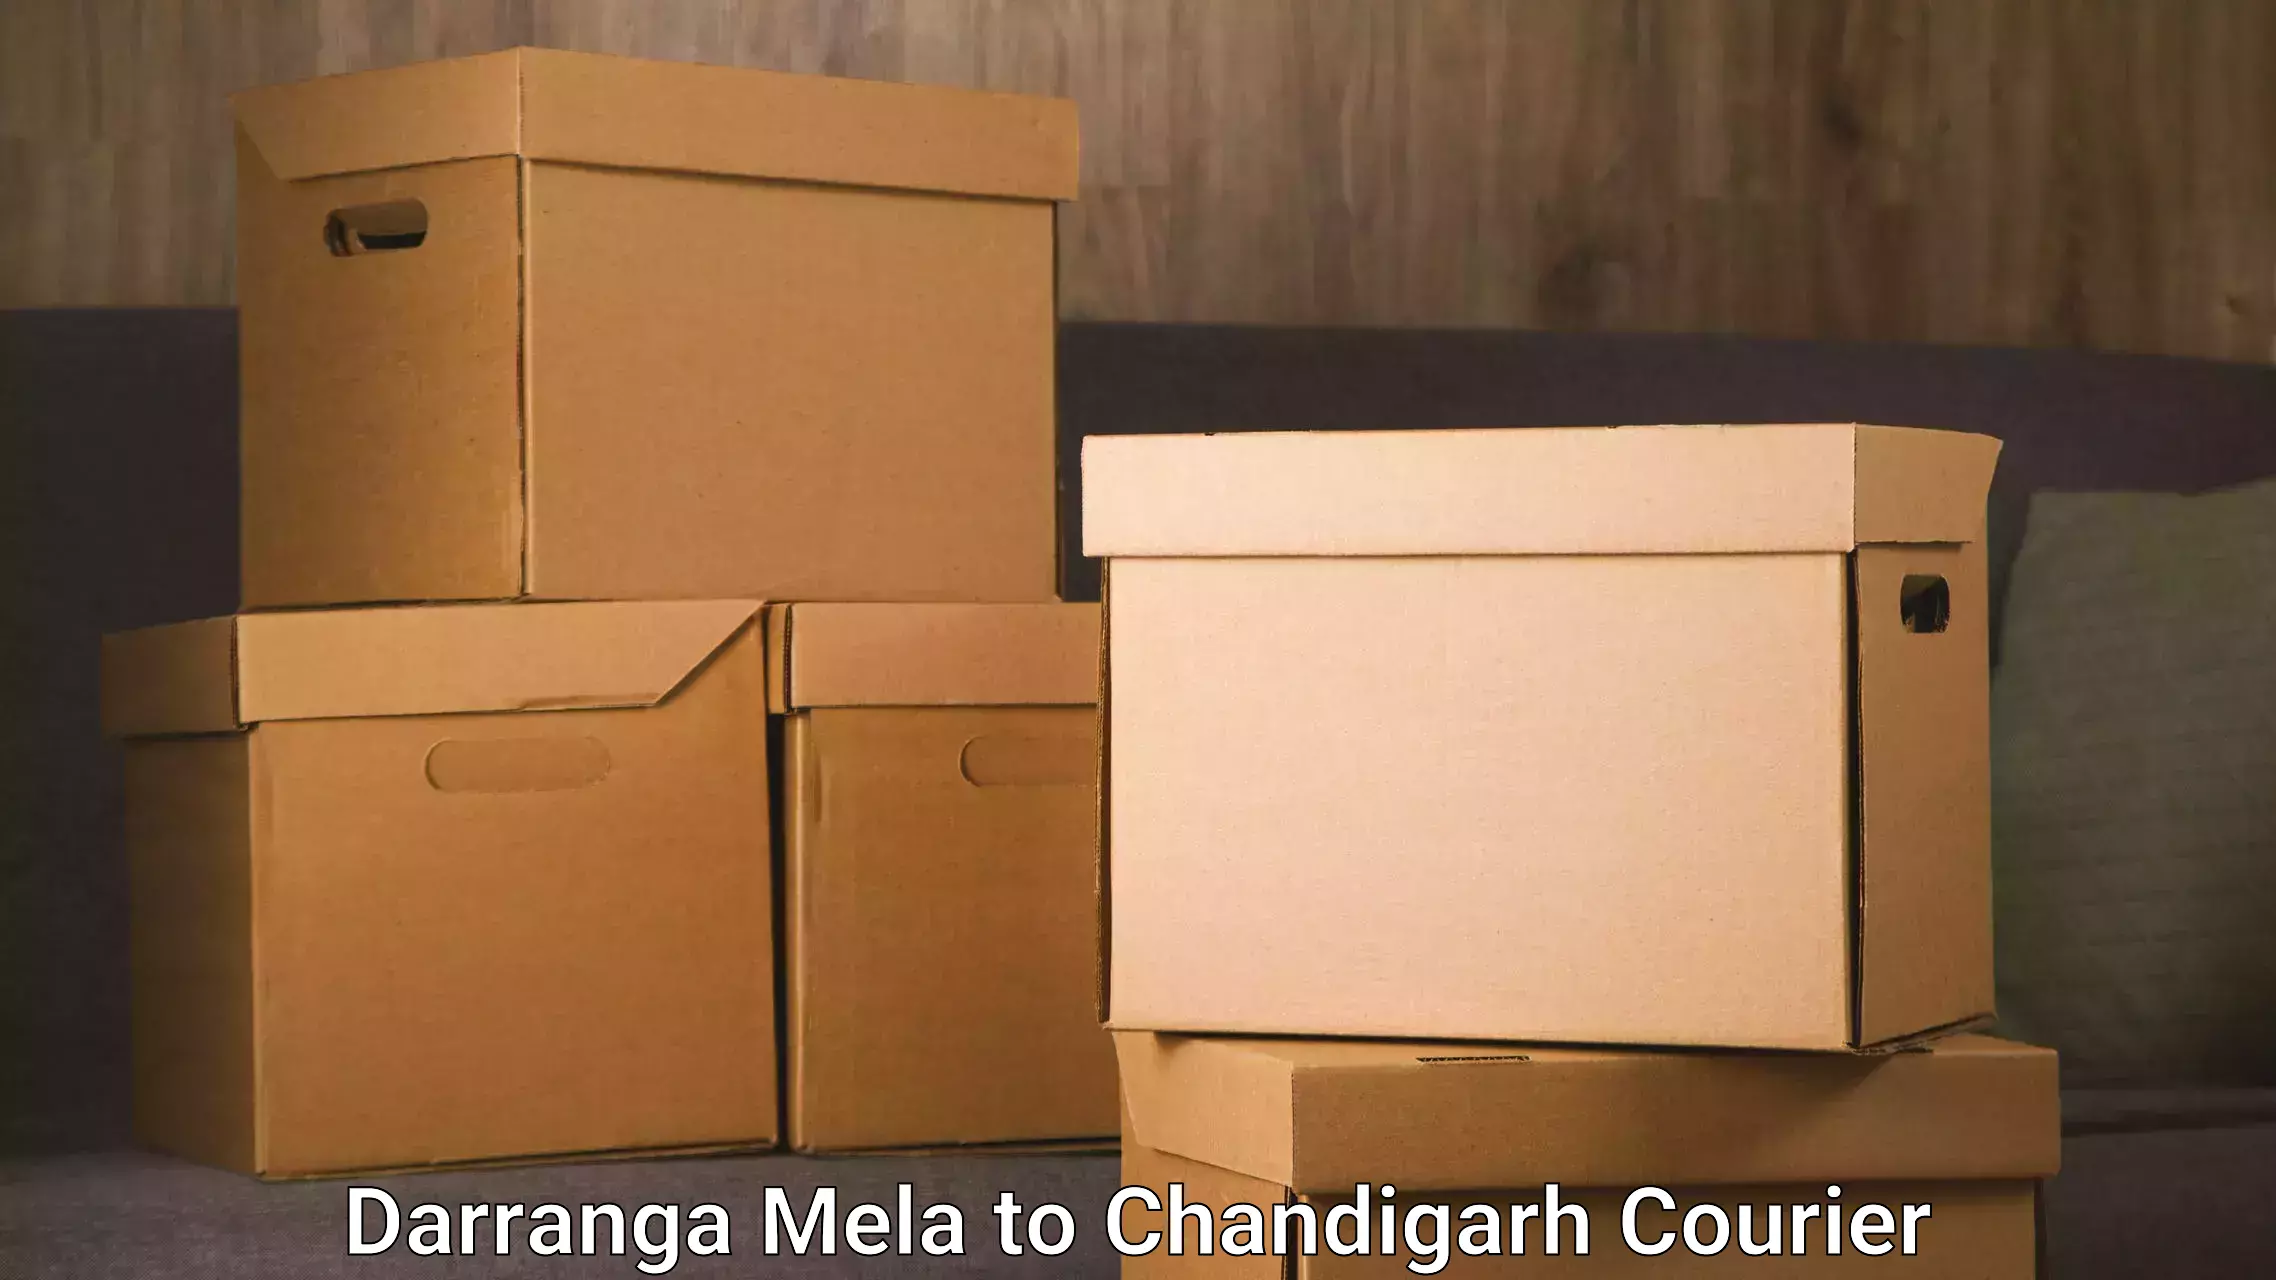 International shipping rates Darranga Mela to Chandigarh